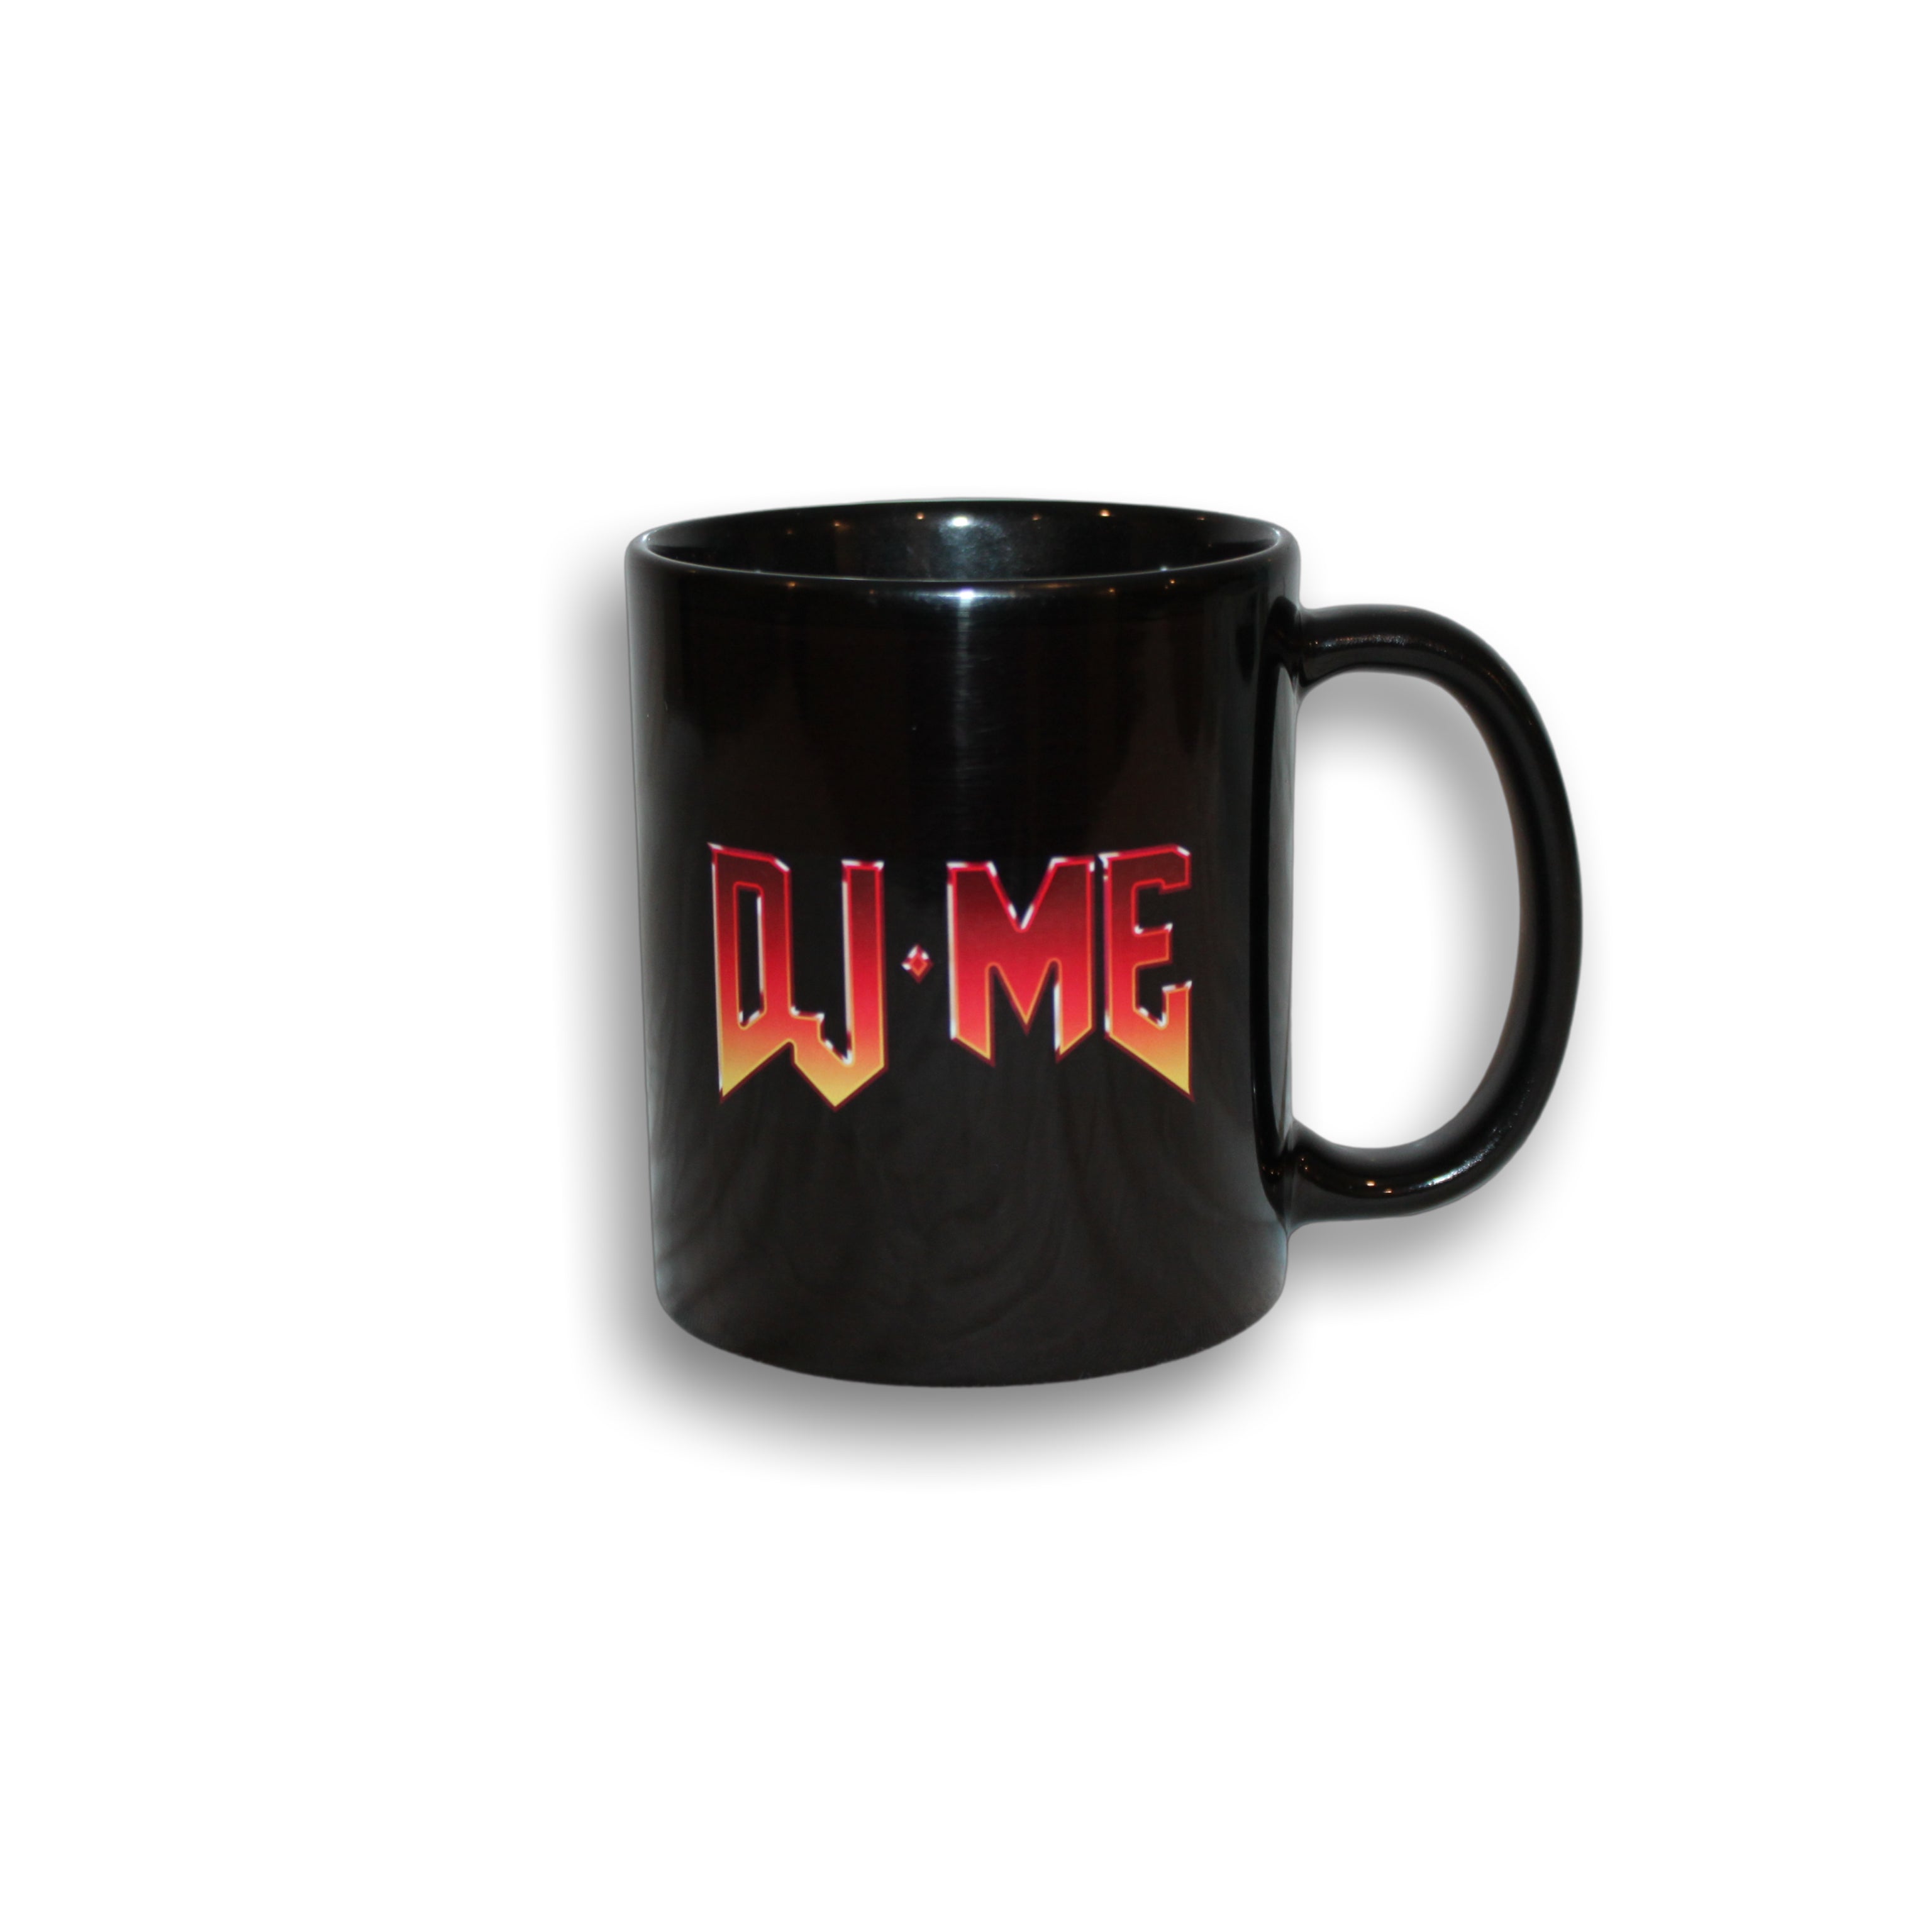 CUSTOM 'DJME' COFFEE MUG